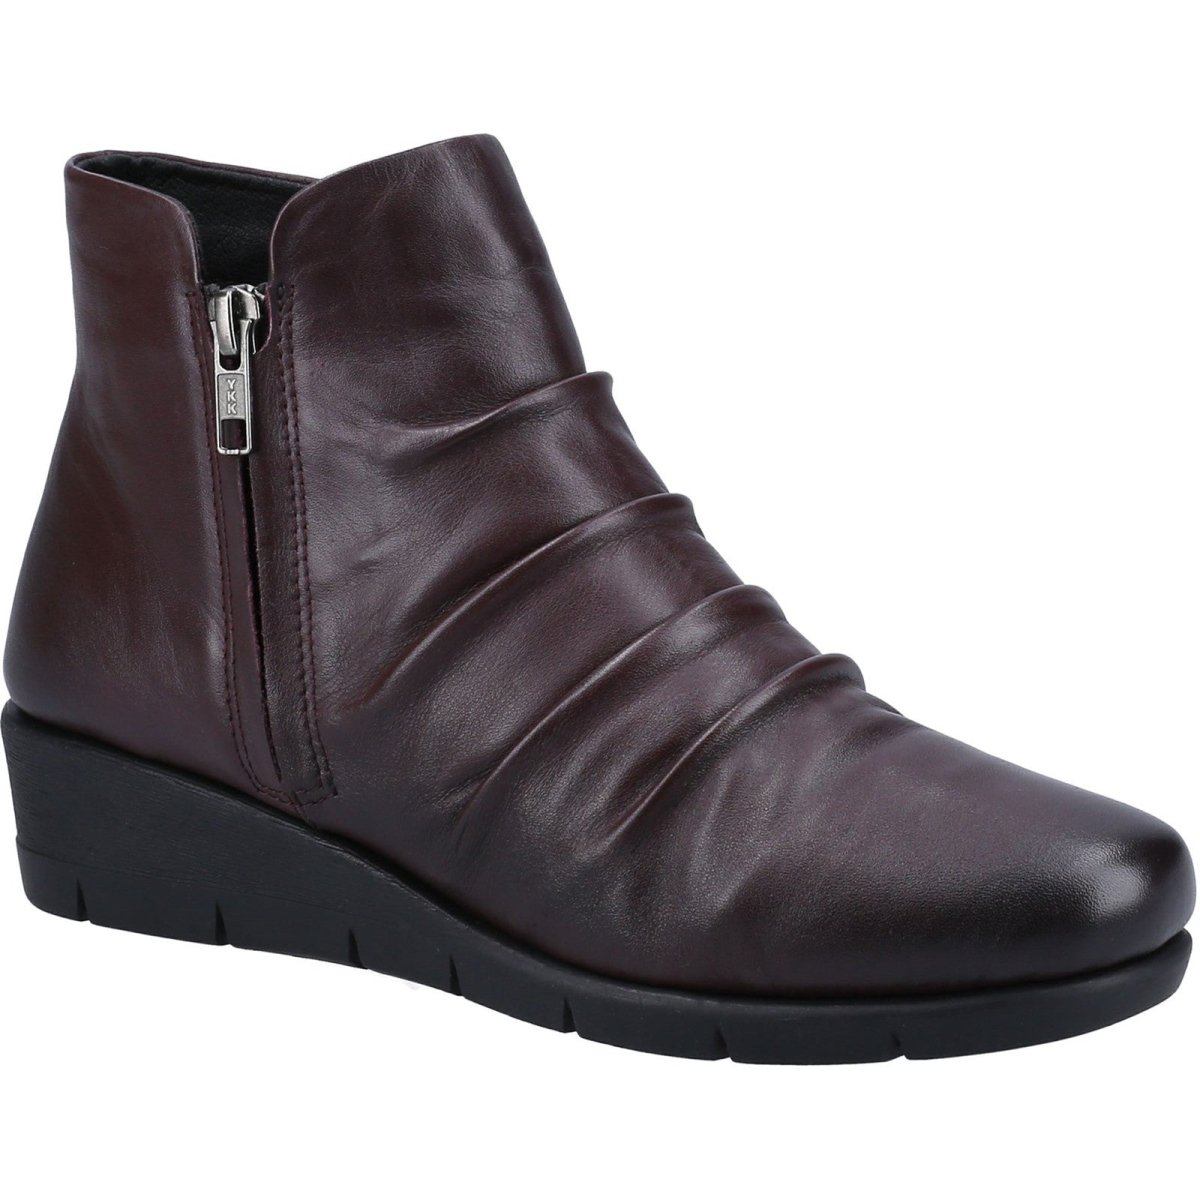 Fleet & Foster Plockton Leather Ladies Ankle Boot - Shoe Store Direct